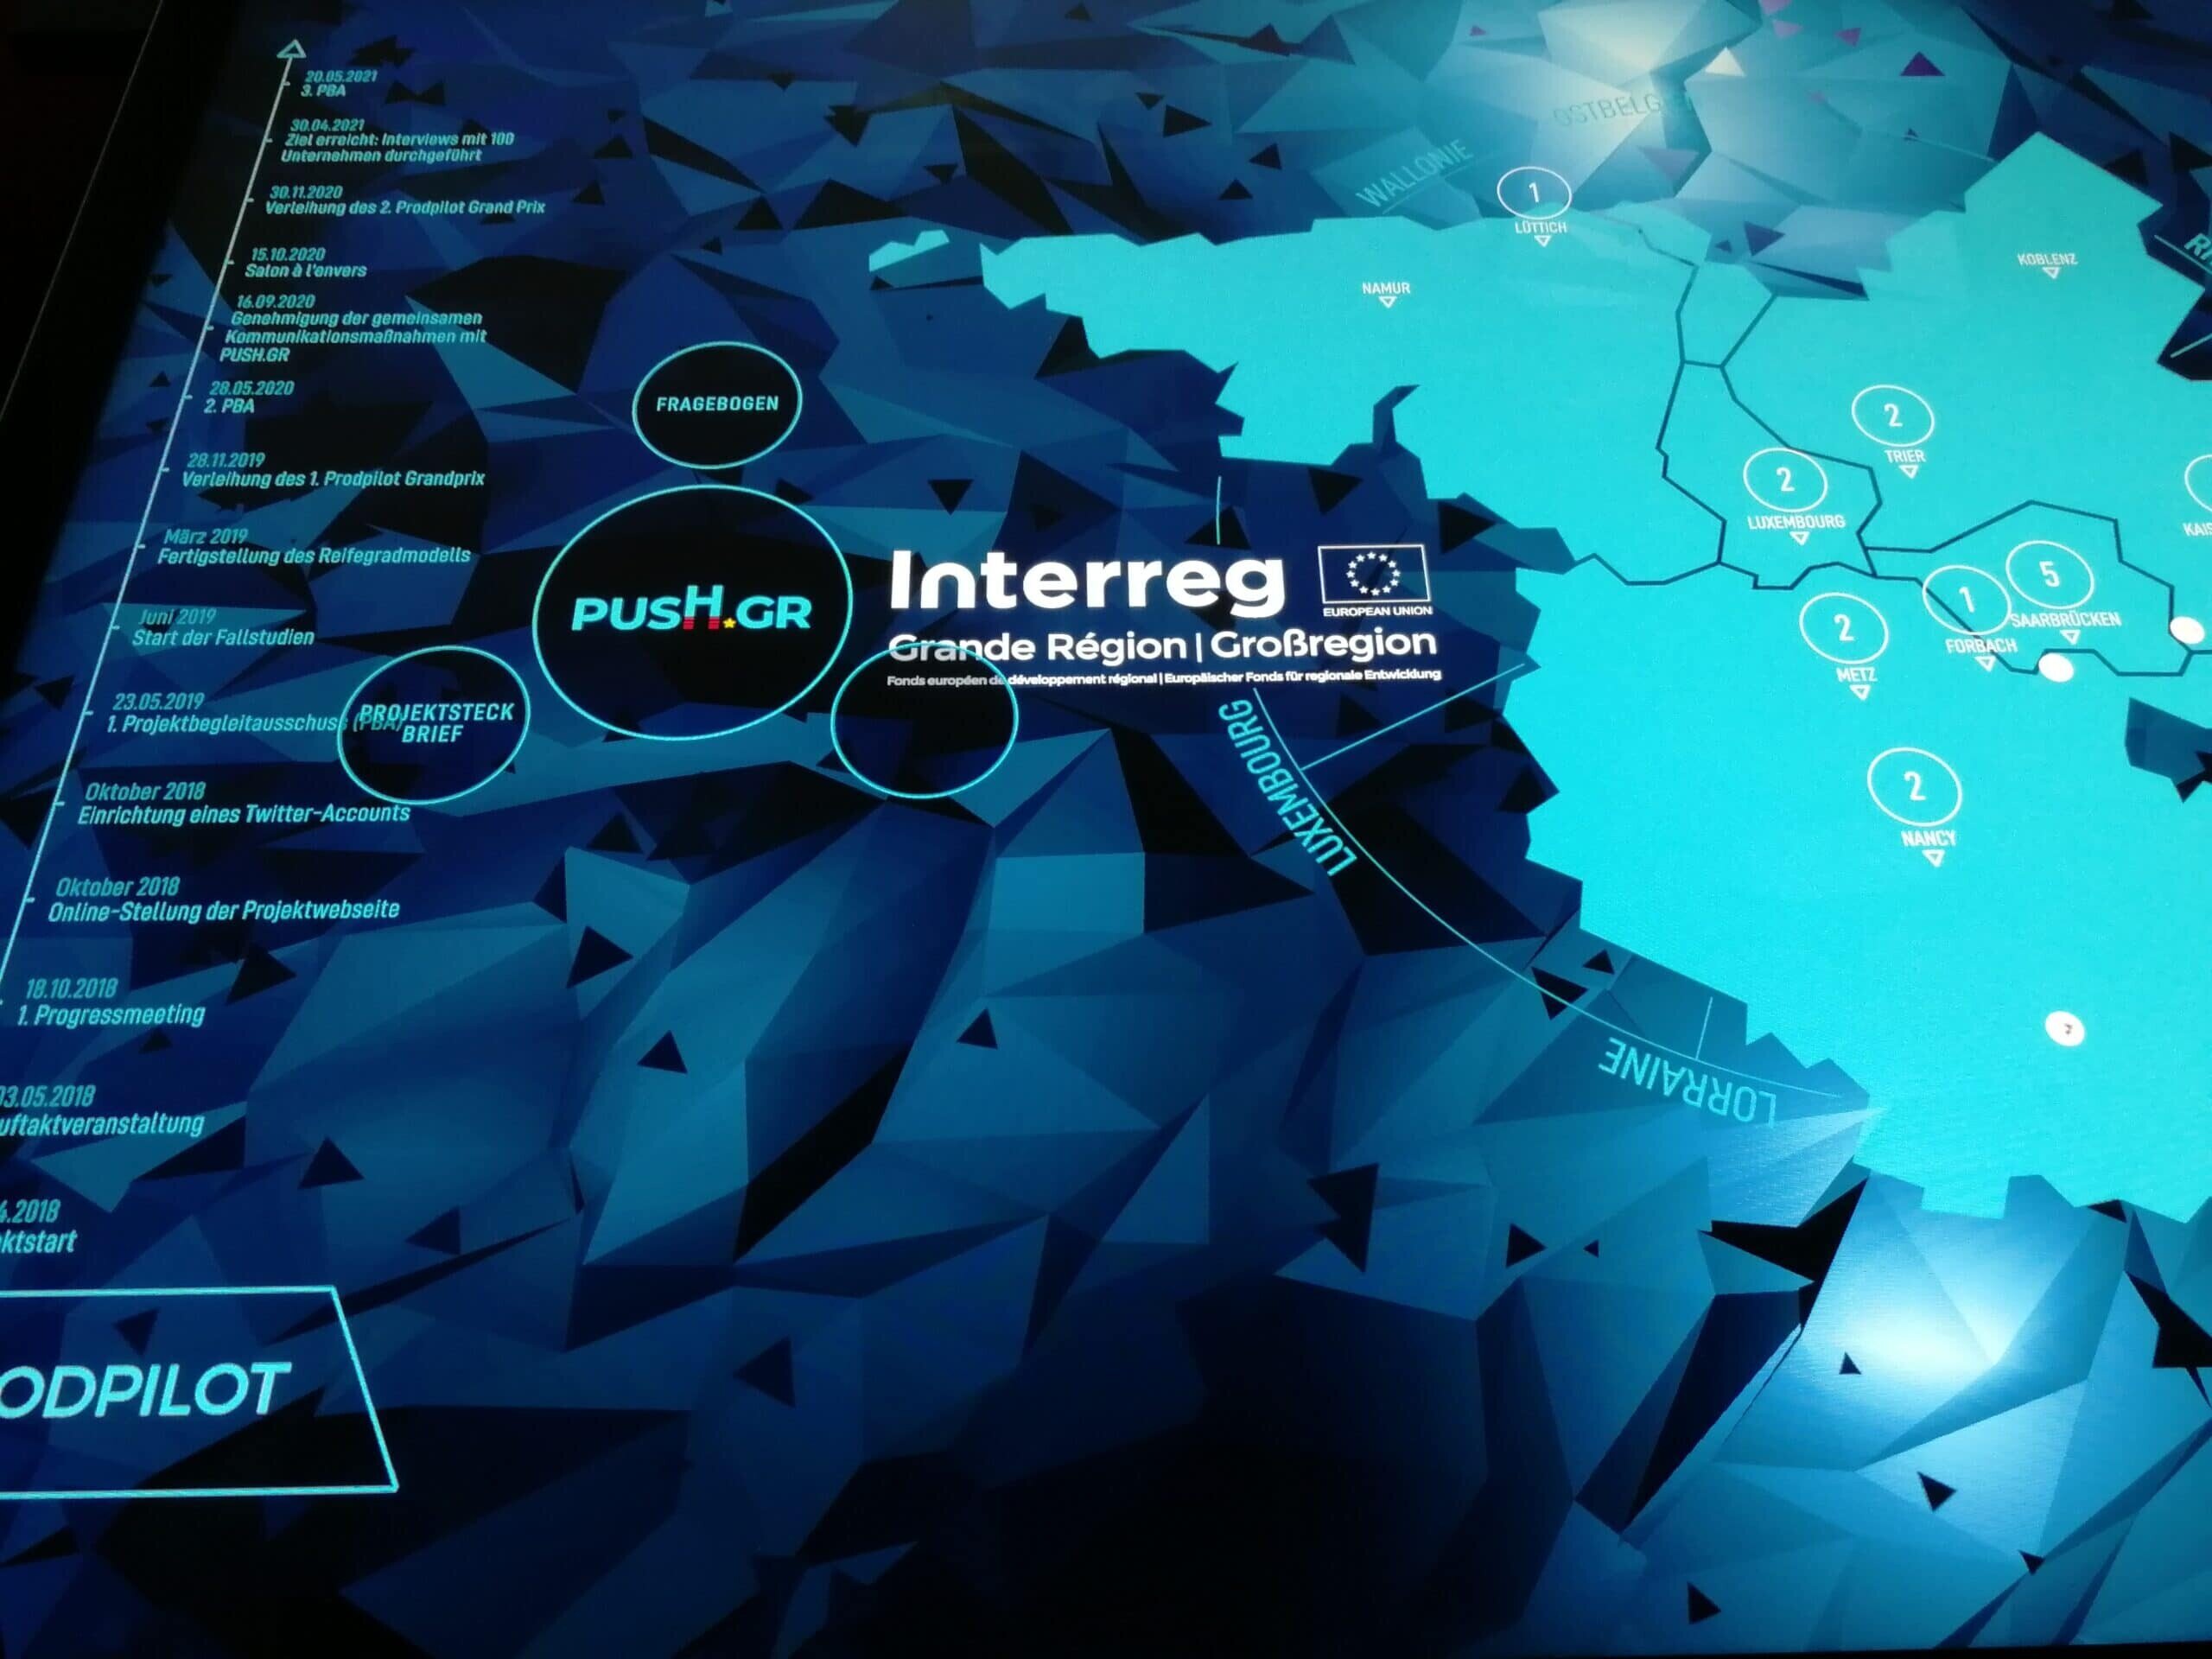 htw saar presents interreg projects on multitouch table